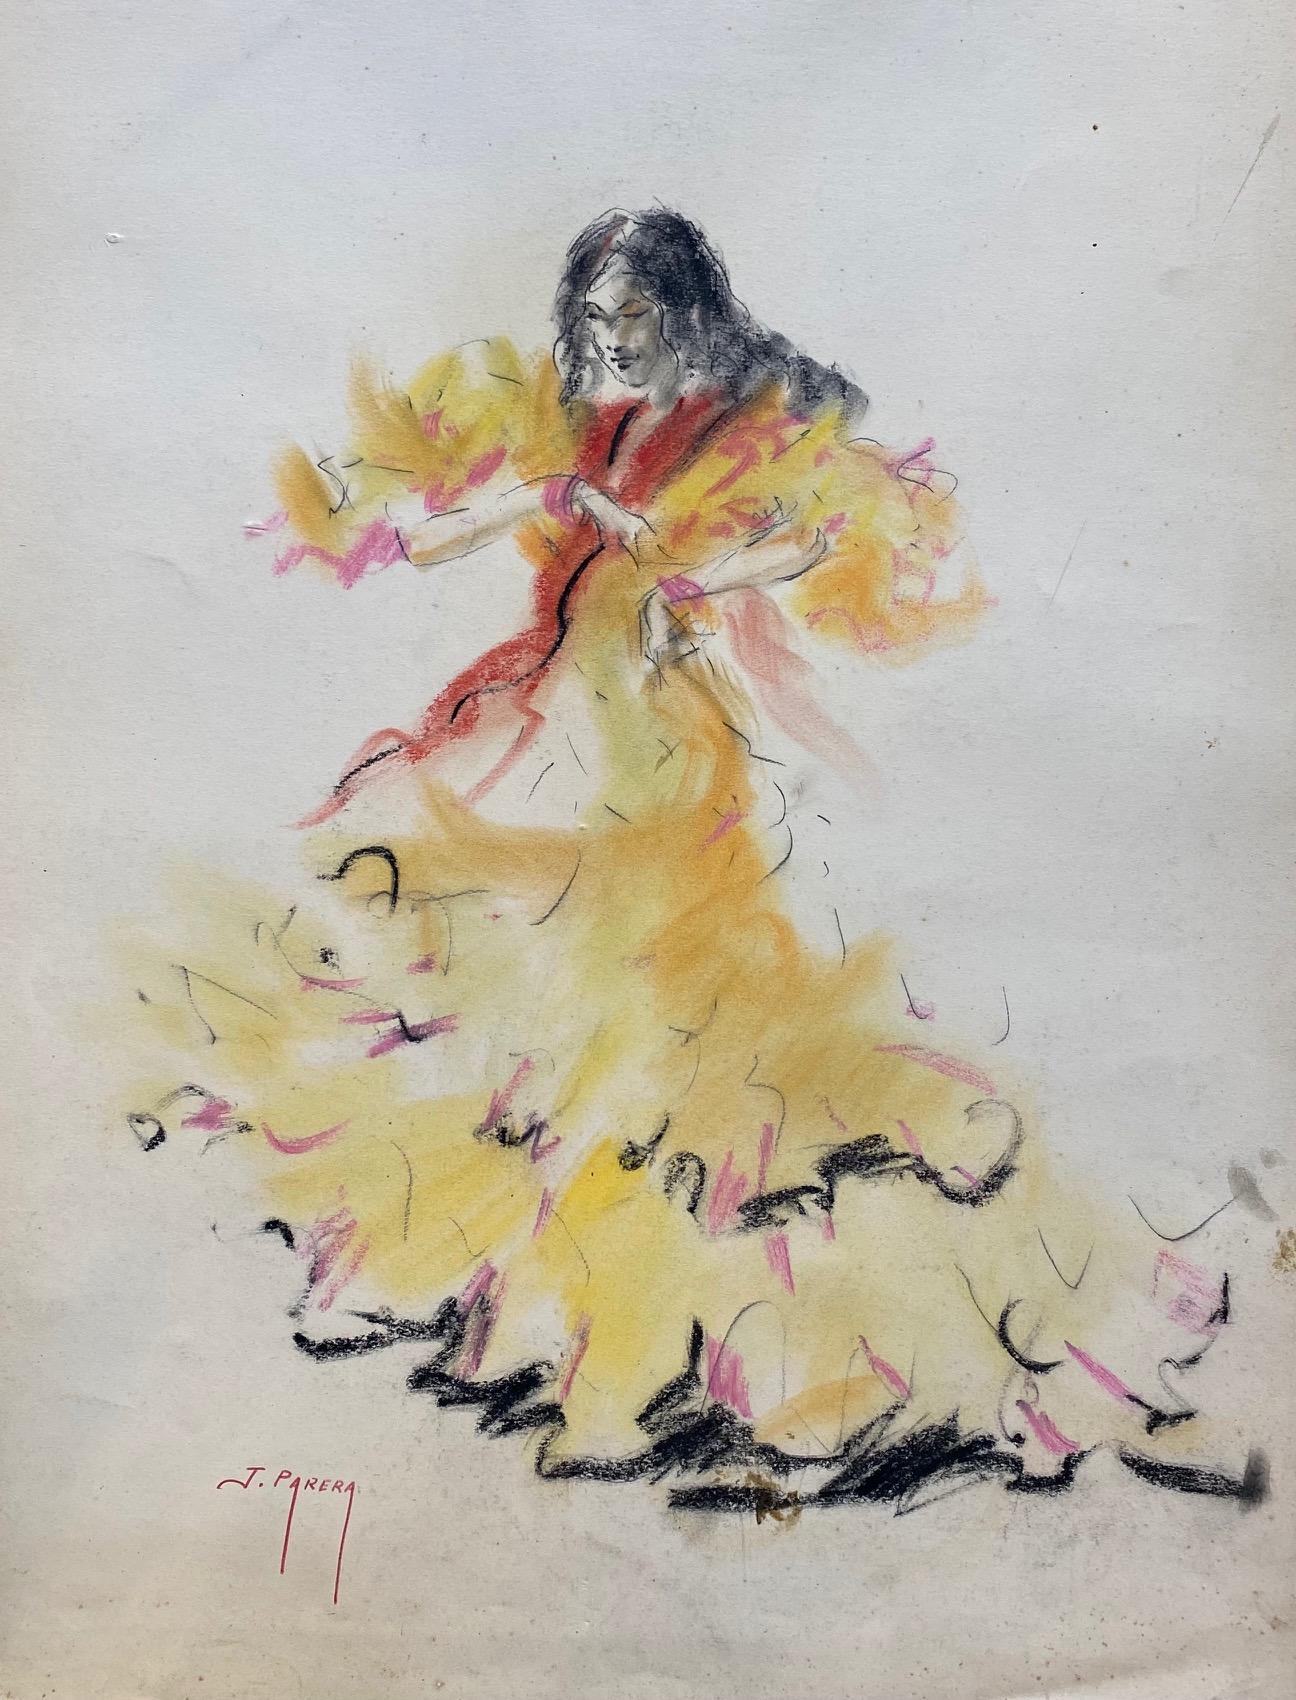 Flamenco dancer by Jose Parera - Oil pastel on paper 50x70 cm